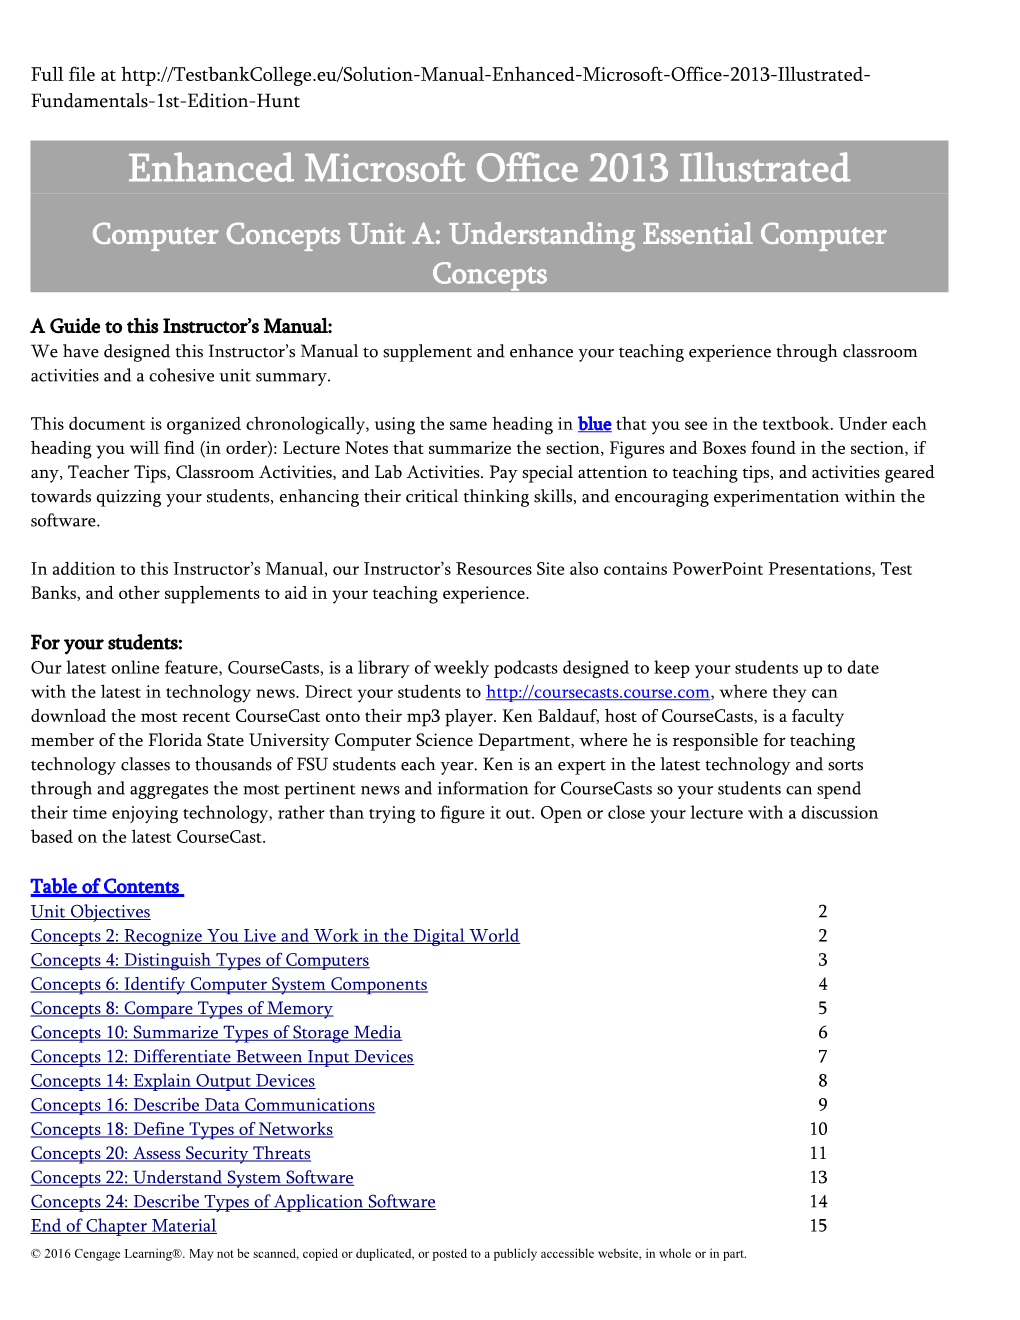 Enhanced Microsoft Office 2013 Illustrated